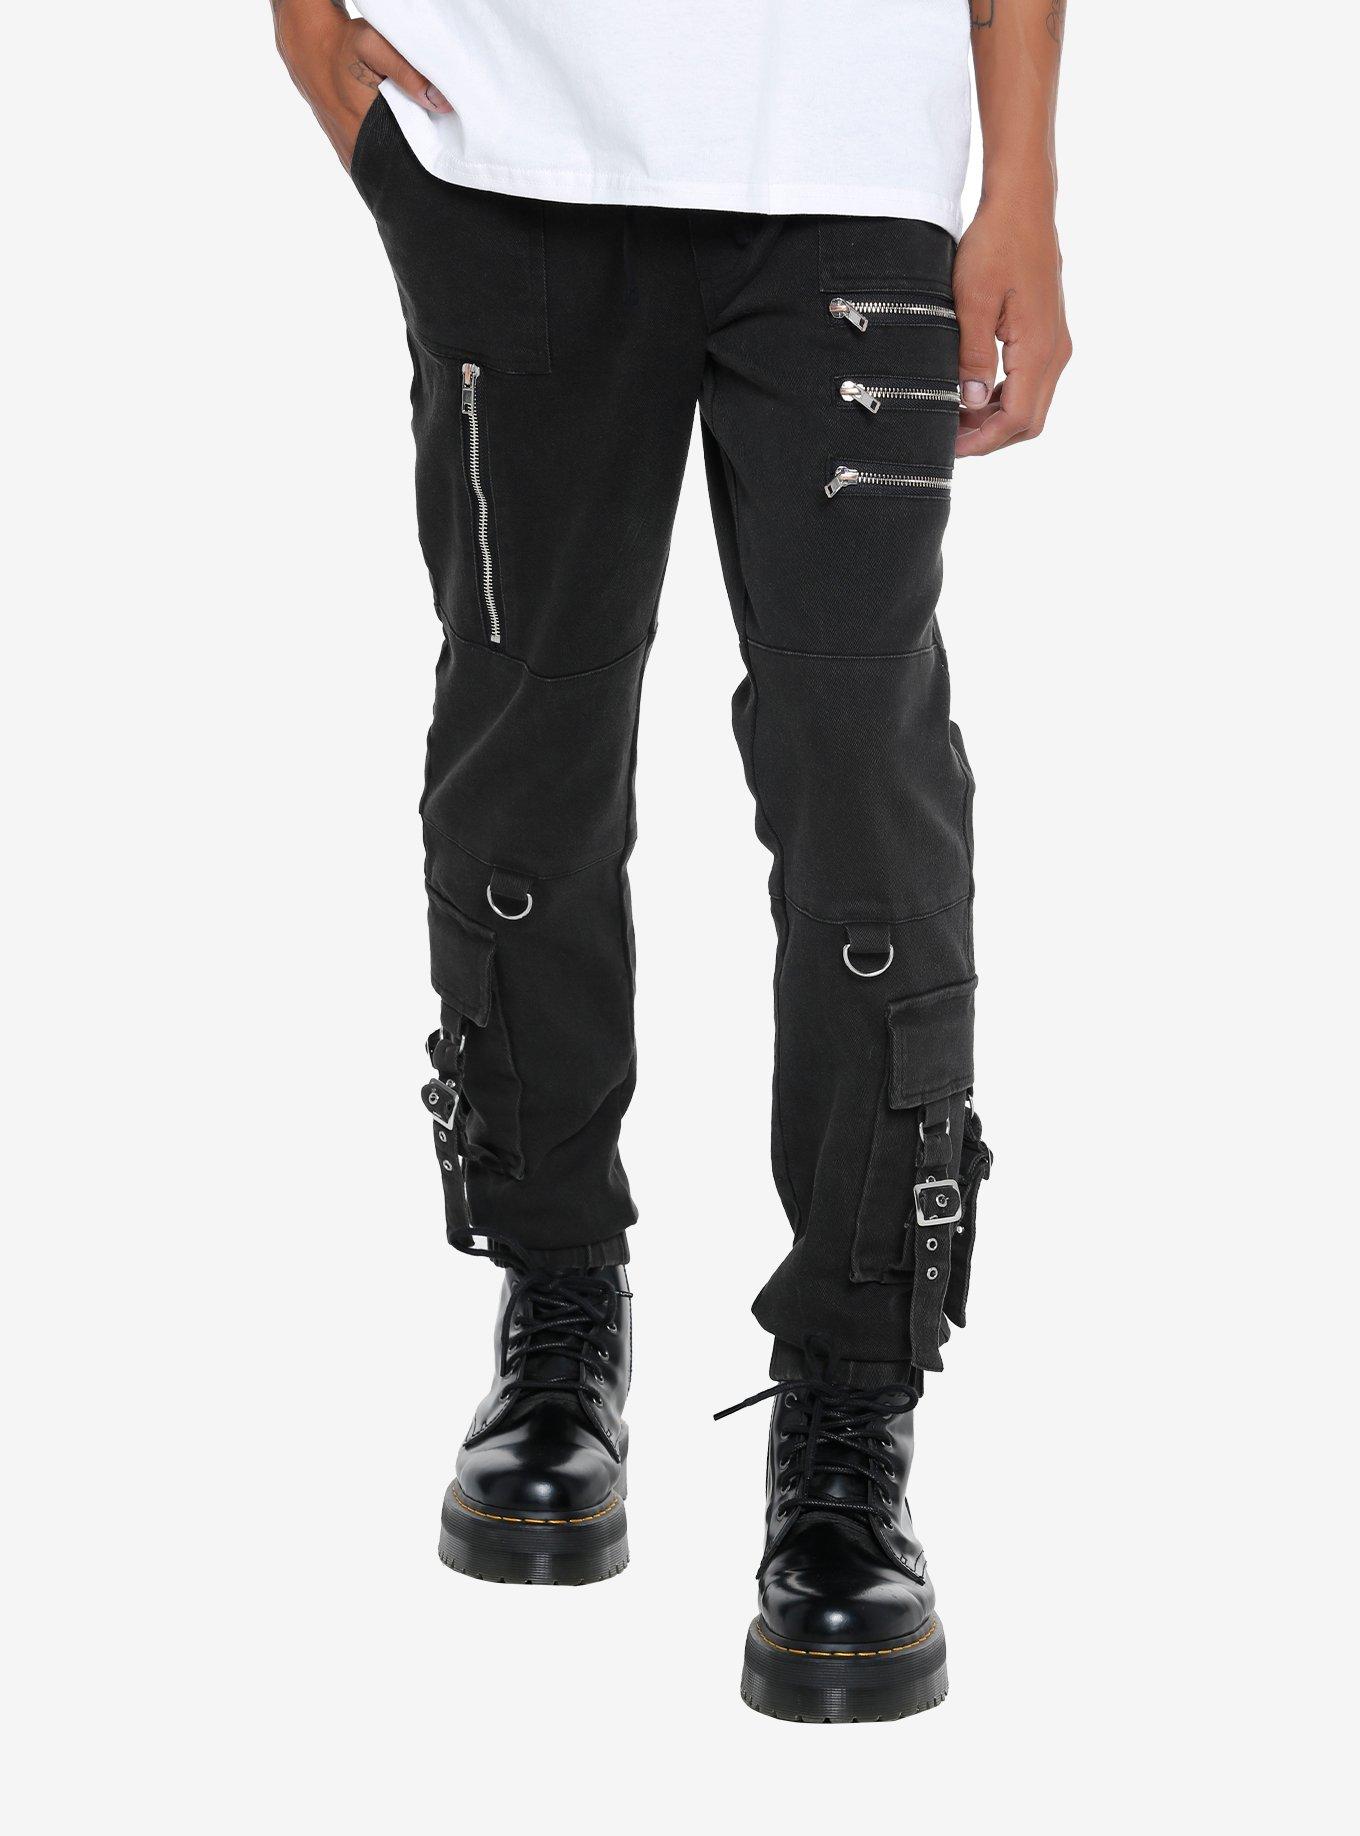 Pants & Jumpsuits  Brand New Black Dragon Fit Joggers Size L